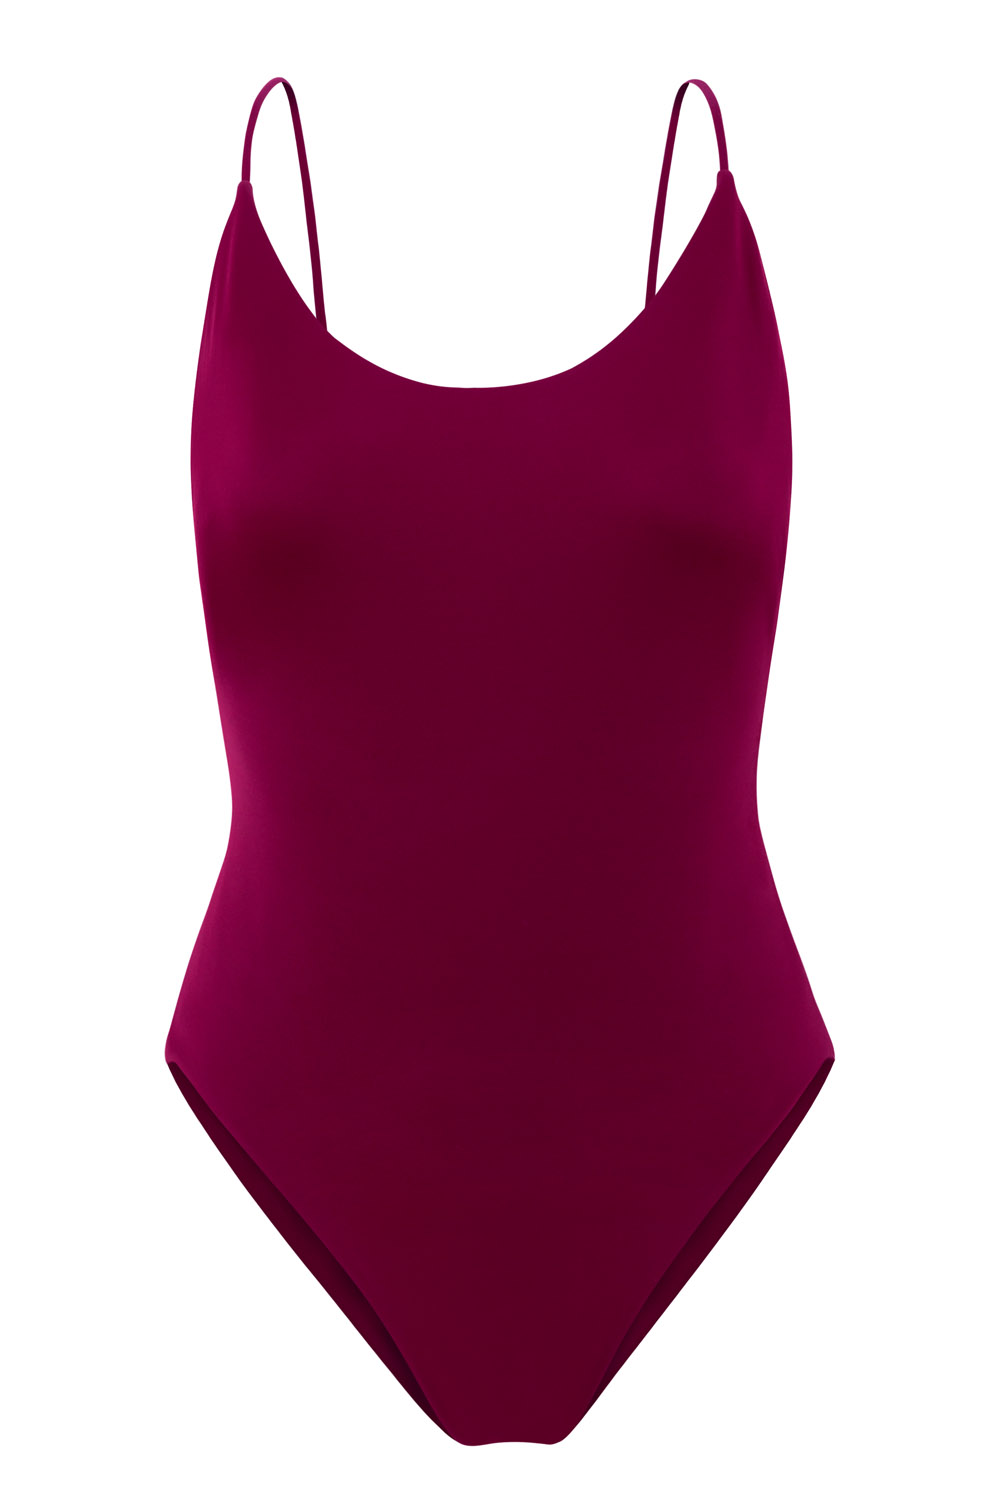 Sustainable Luxury Swimwear / Ropa de baño sostenible, eco swimsuit / bañador ecológico. Alona onepiece in pitaya, by NOW_THEN